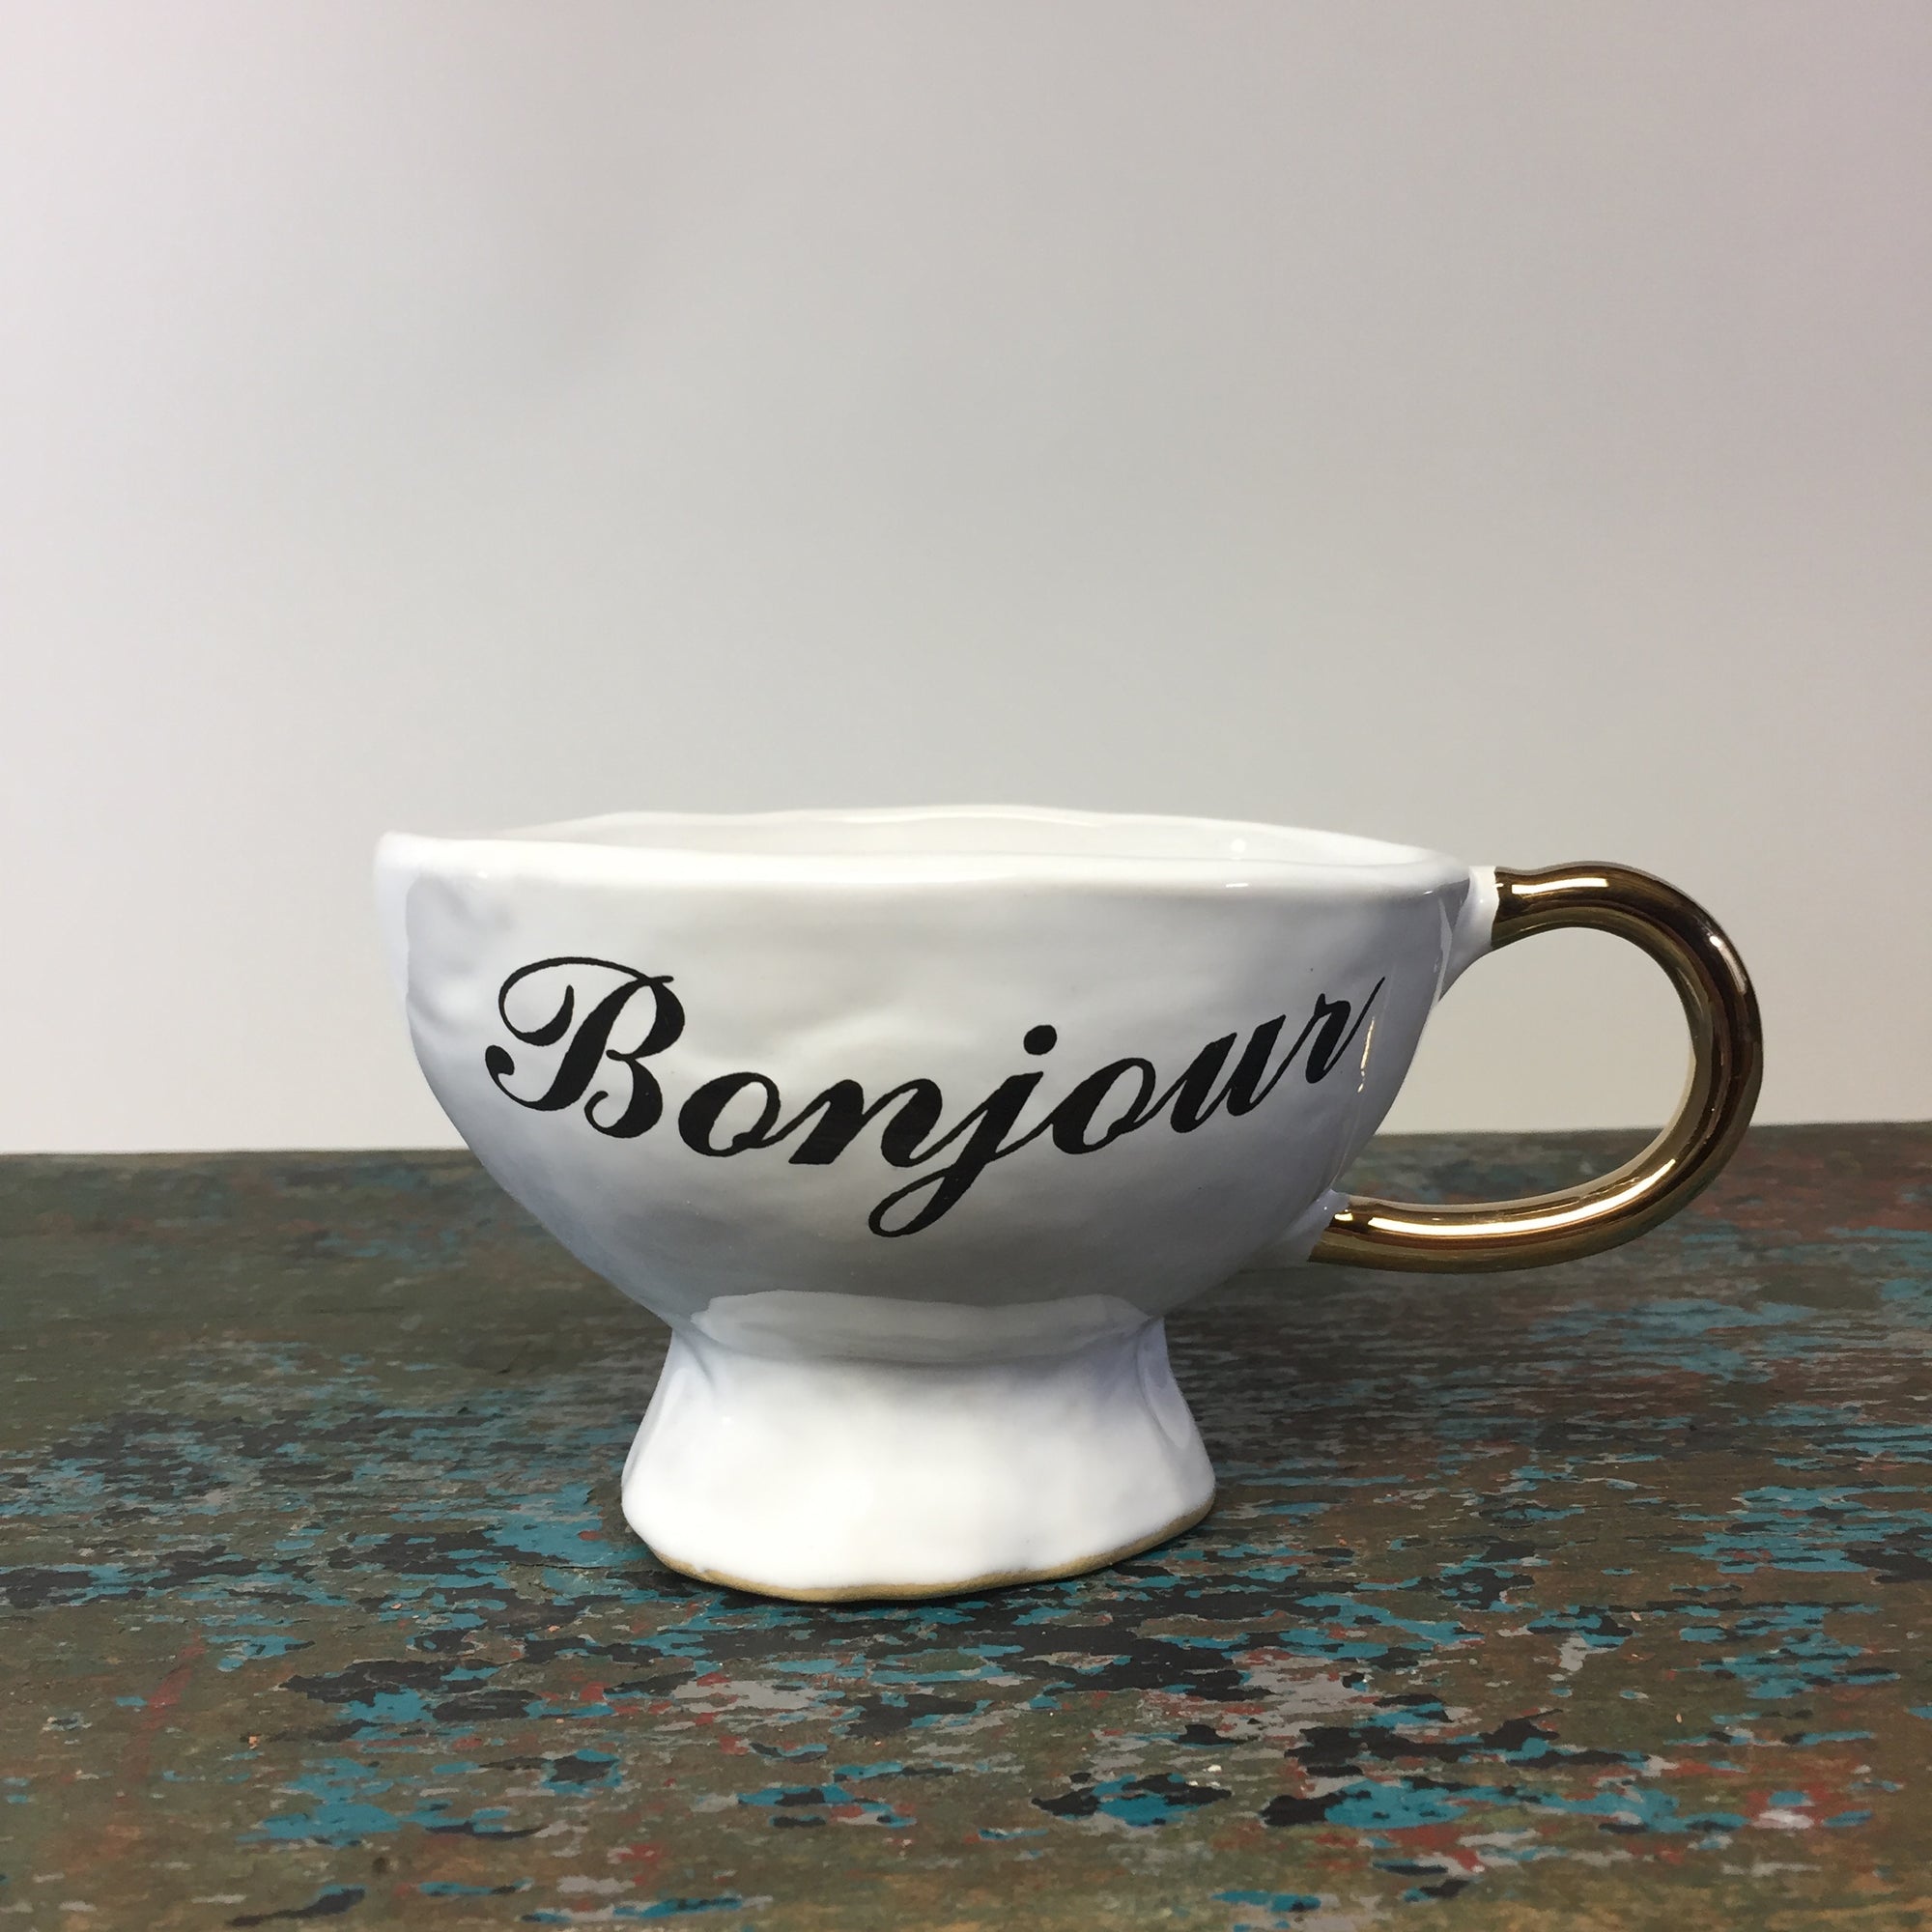 Kuhn Keramik Bonjour 'Glam' Office Coffee Cup